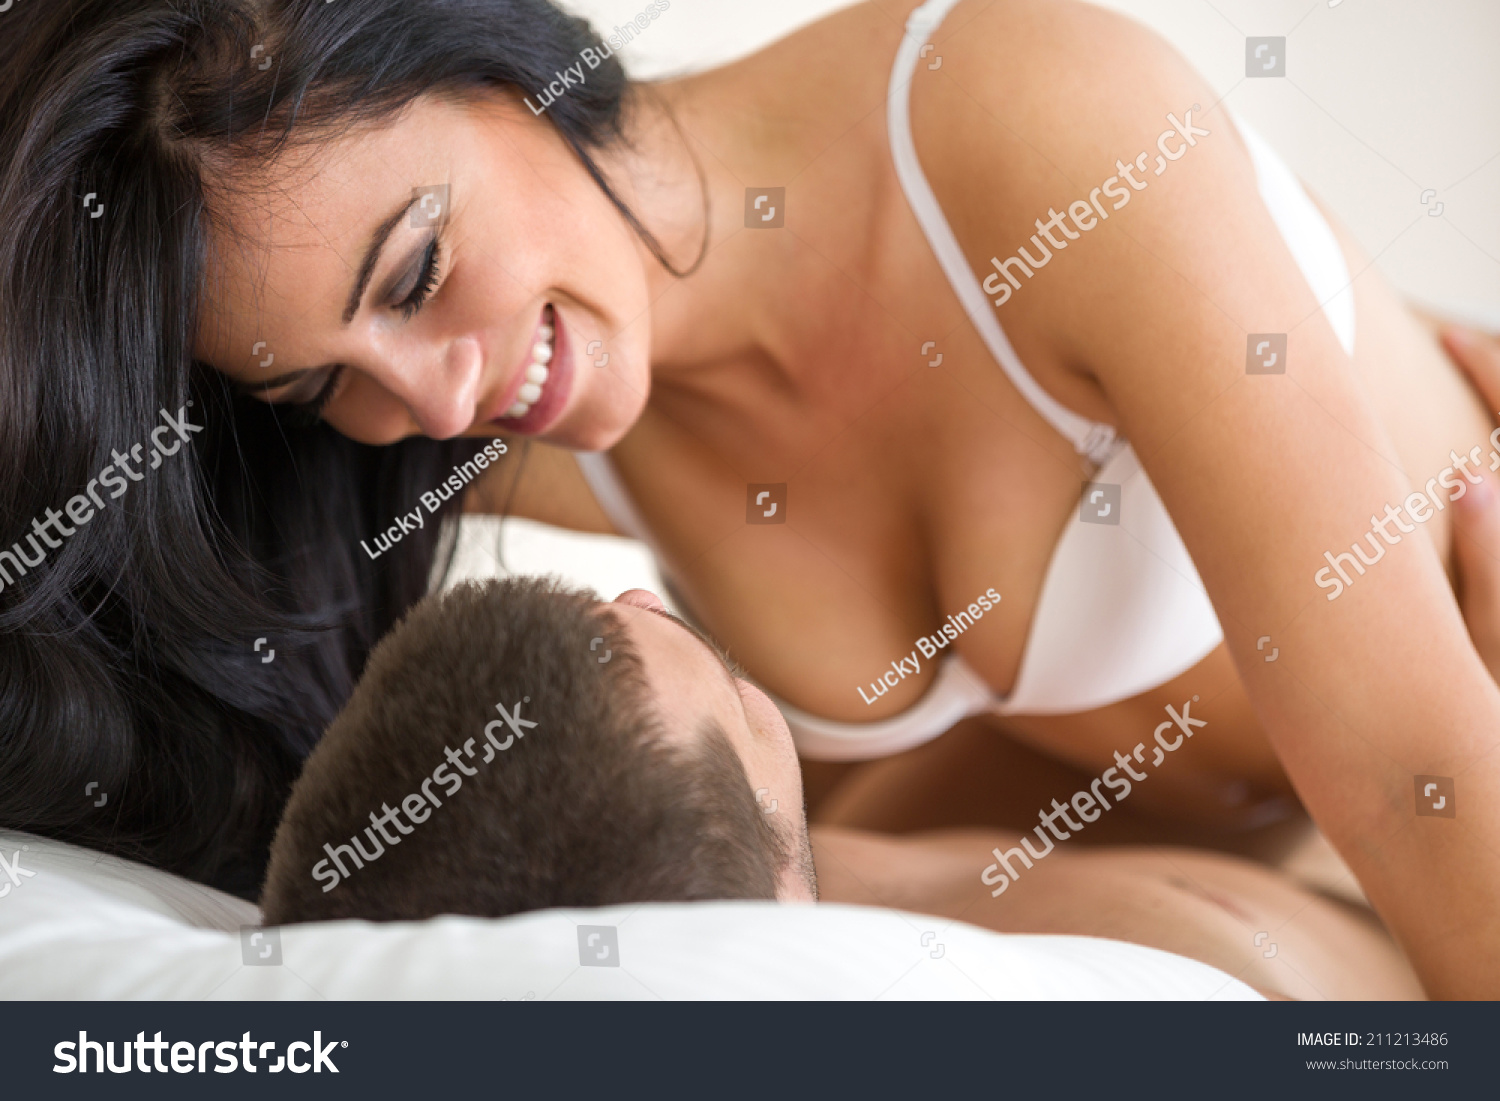 Porn Sex In Bed 78